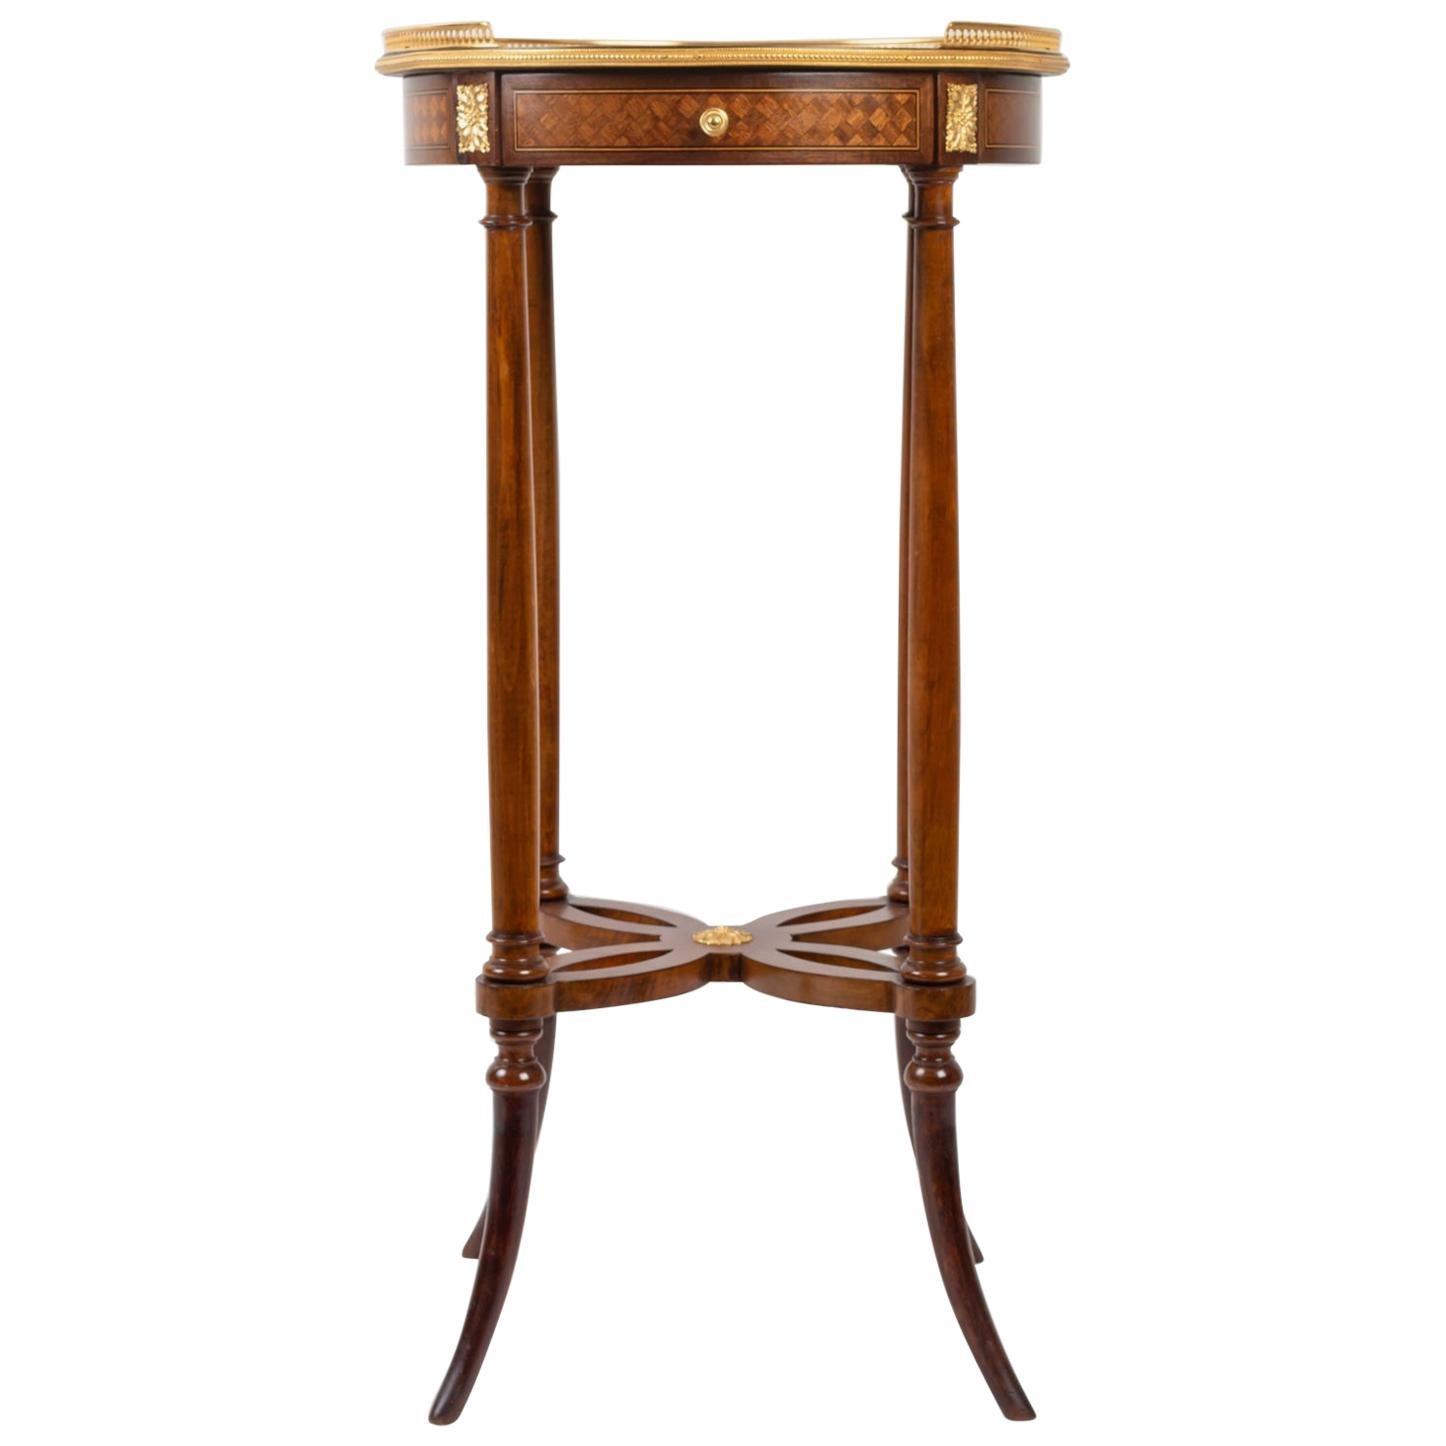  Napoleon III Style Pedestal Table in Walnut Veneer